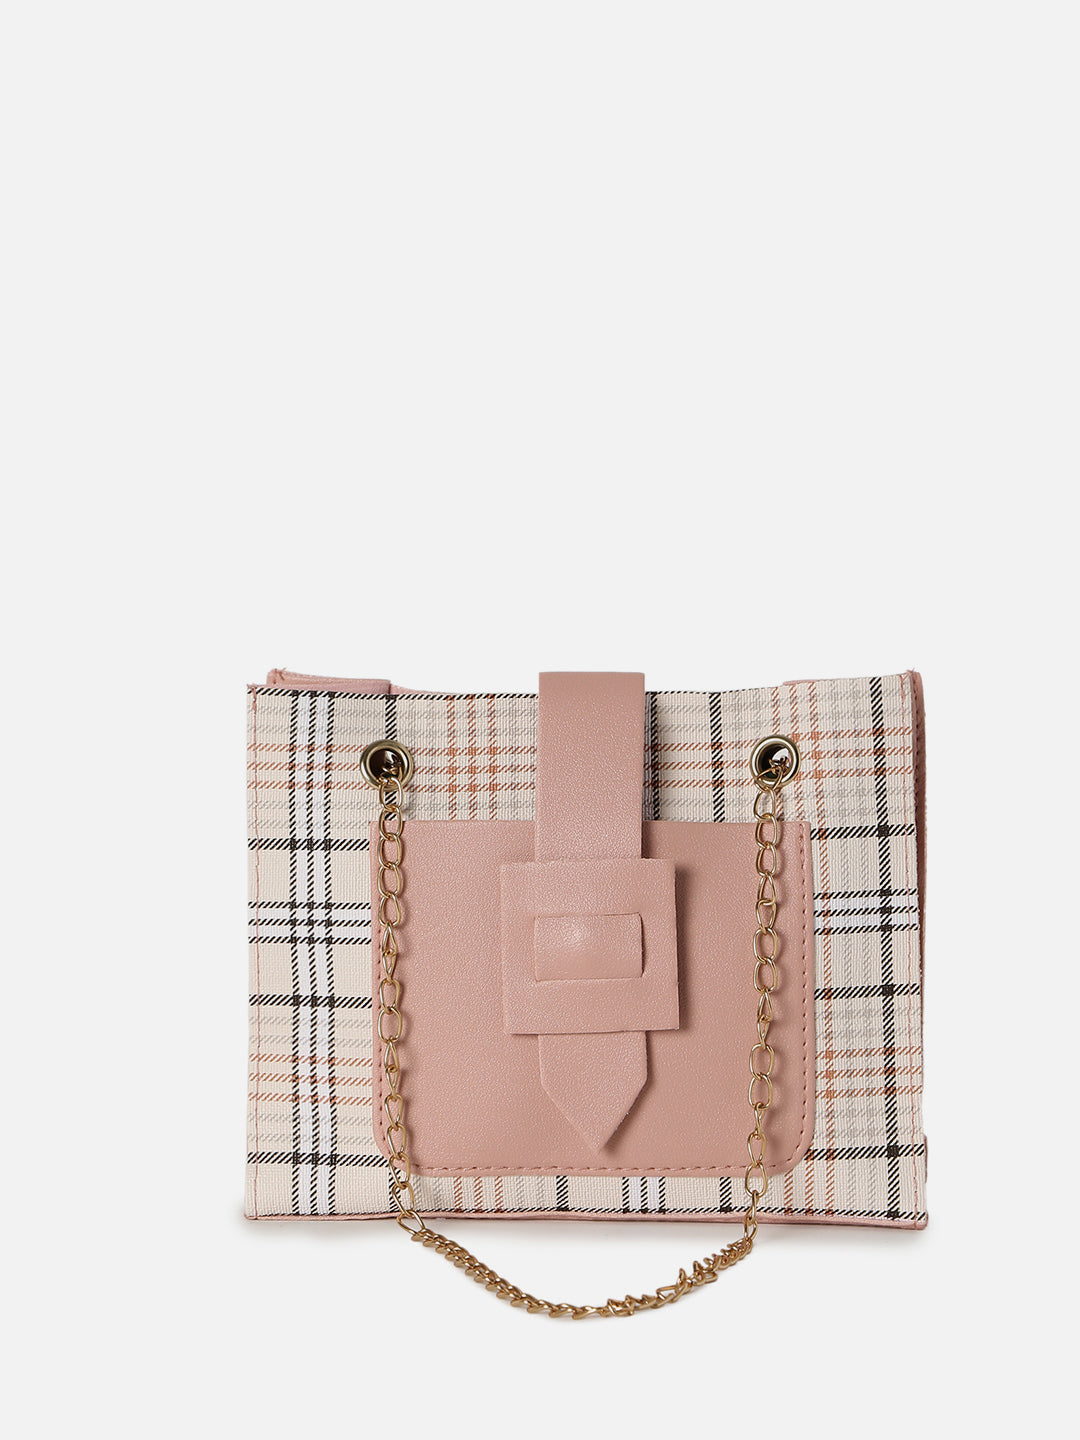 Checkered Pink Cross Body Bag